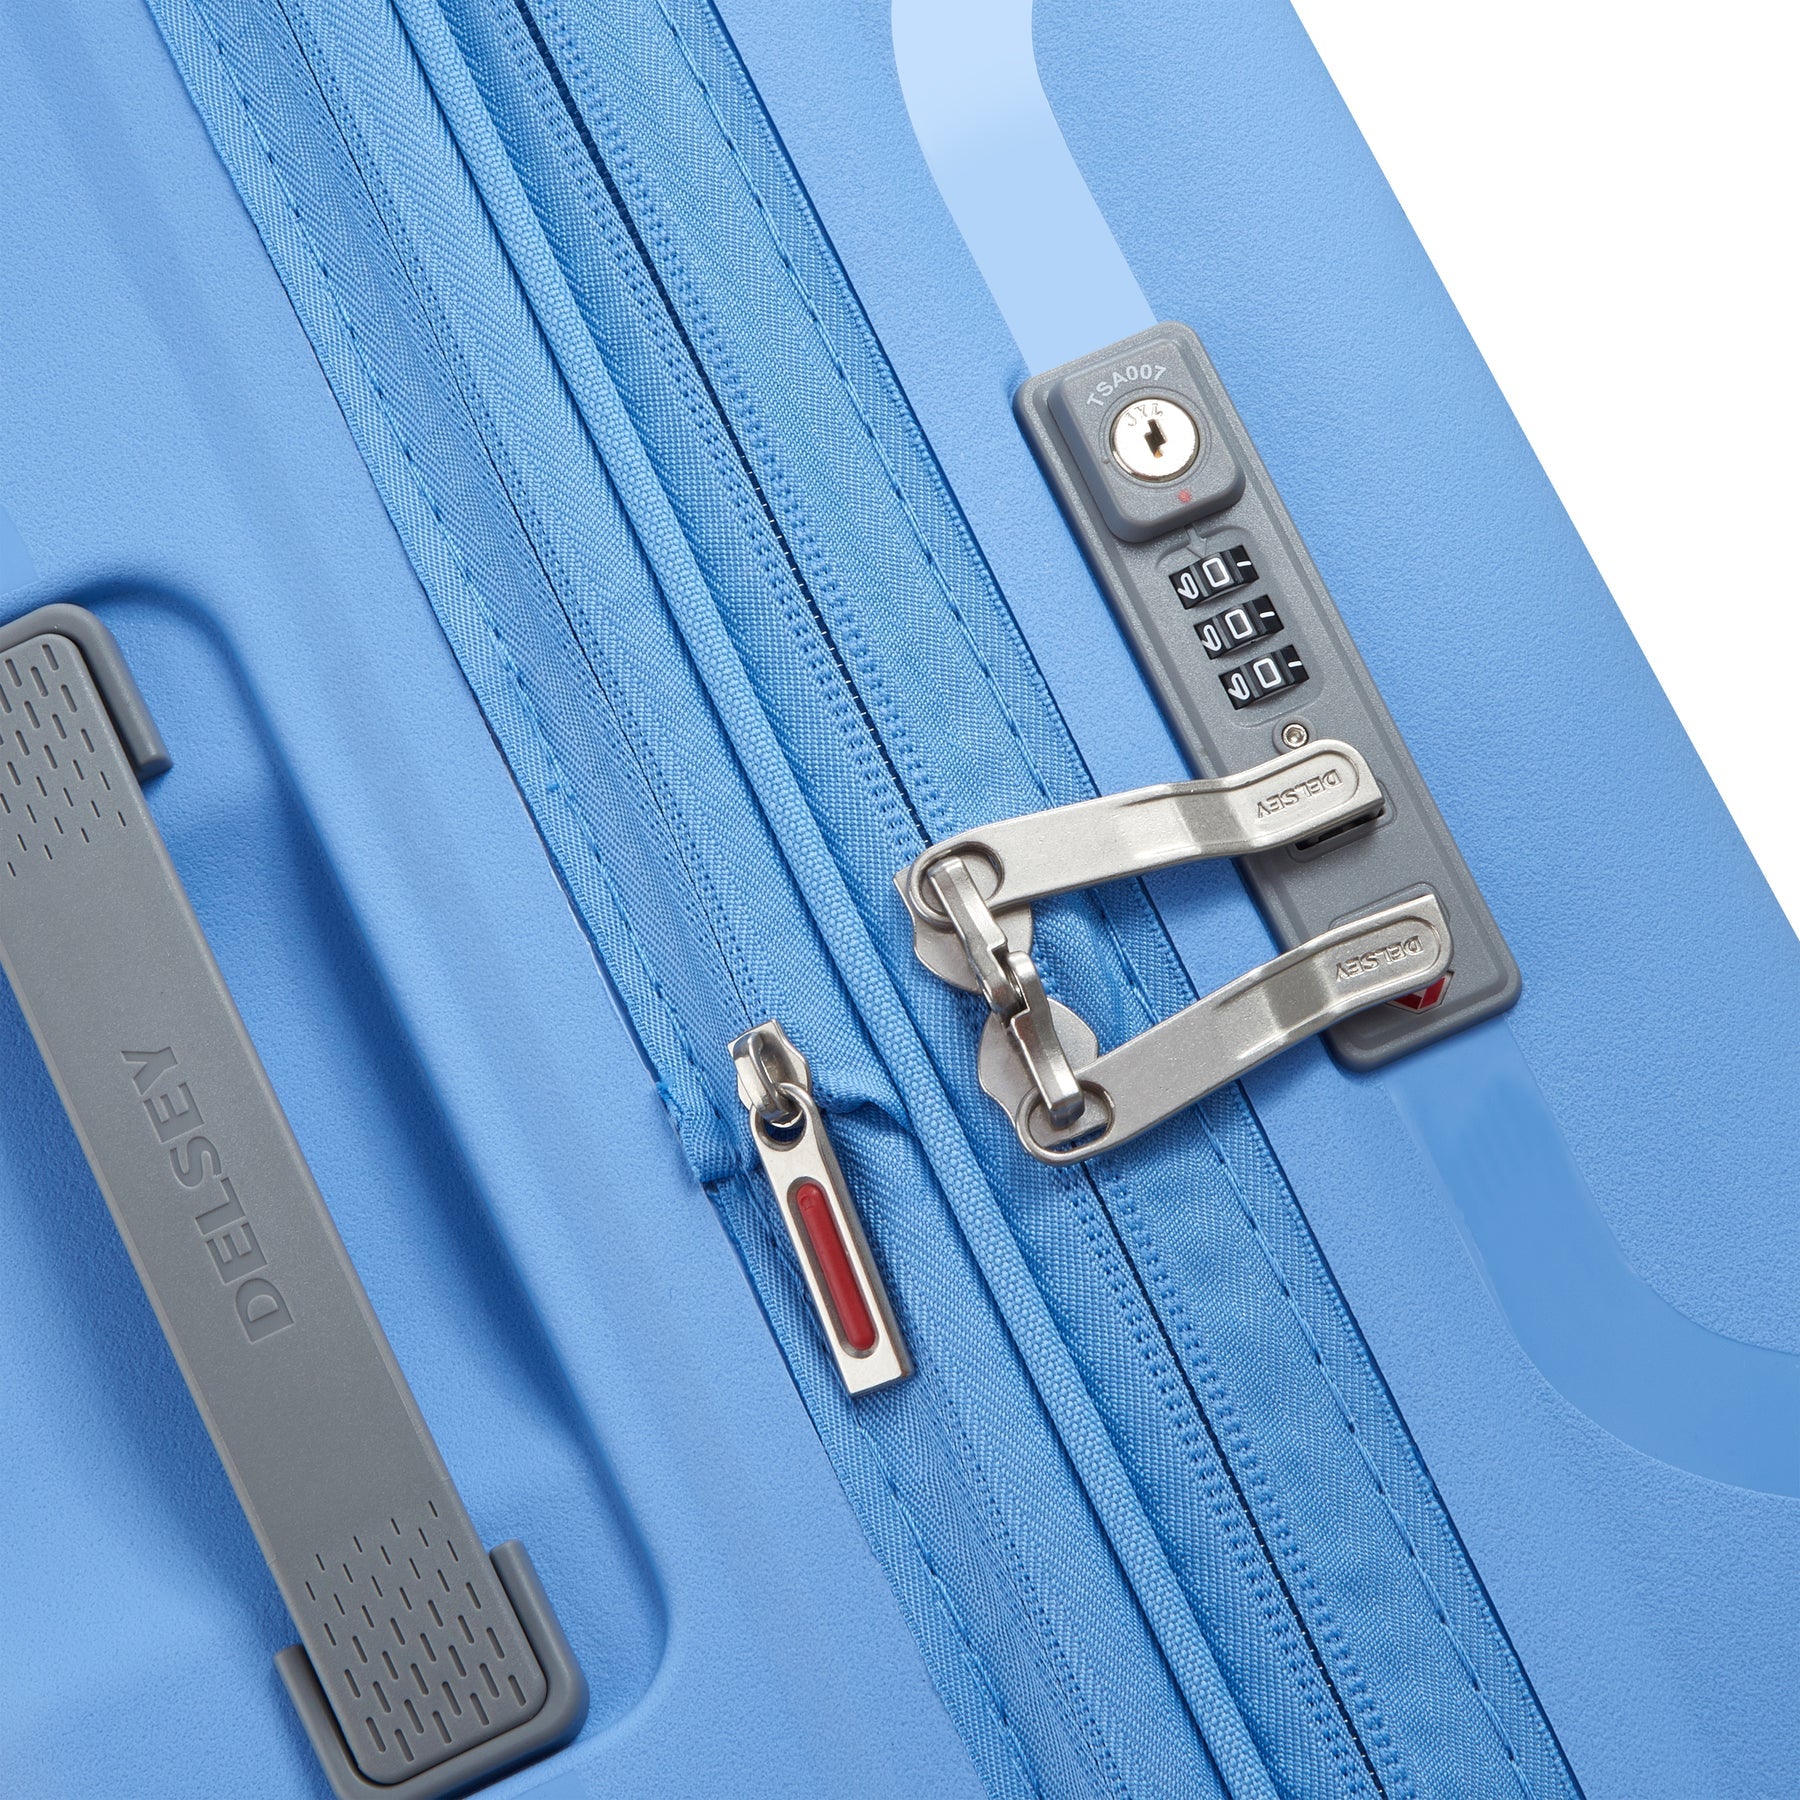 Delsey Clavel Hard Mellomstor Utvidbar Koffert Med 4 Hjul 70 cm Lavender Blue